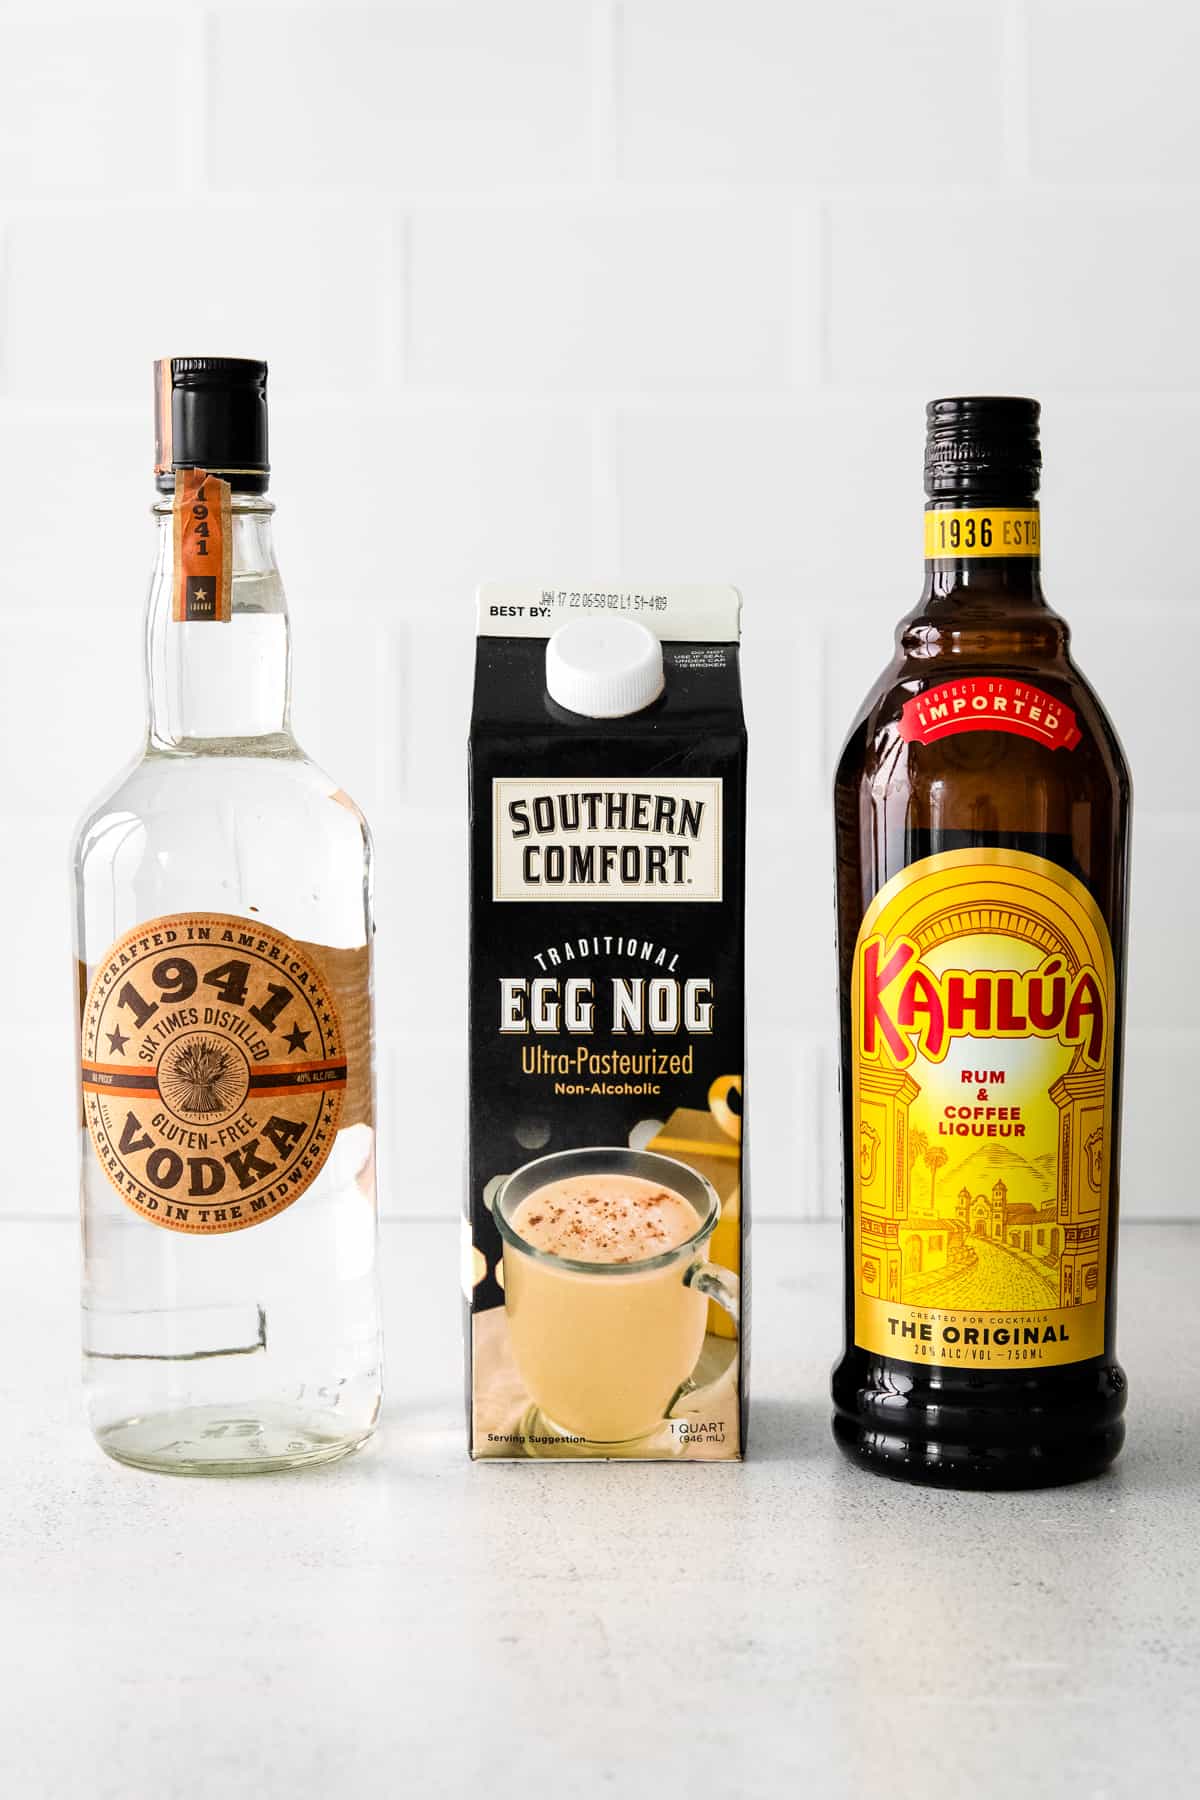 bottle of 1941 vodka, carton of egg nog, and bottle of Kahlua coffee liquor